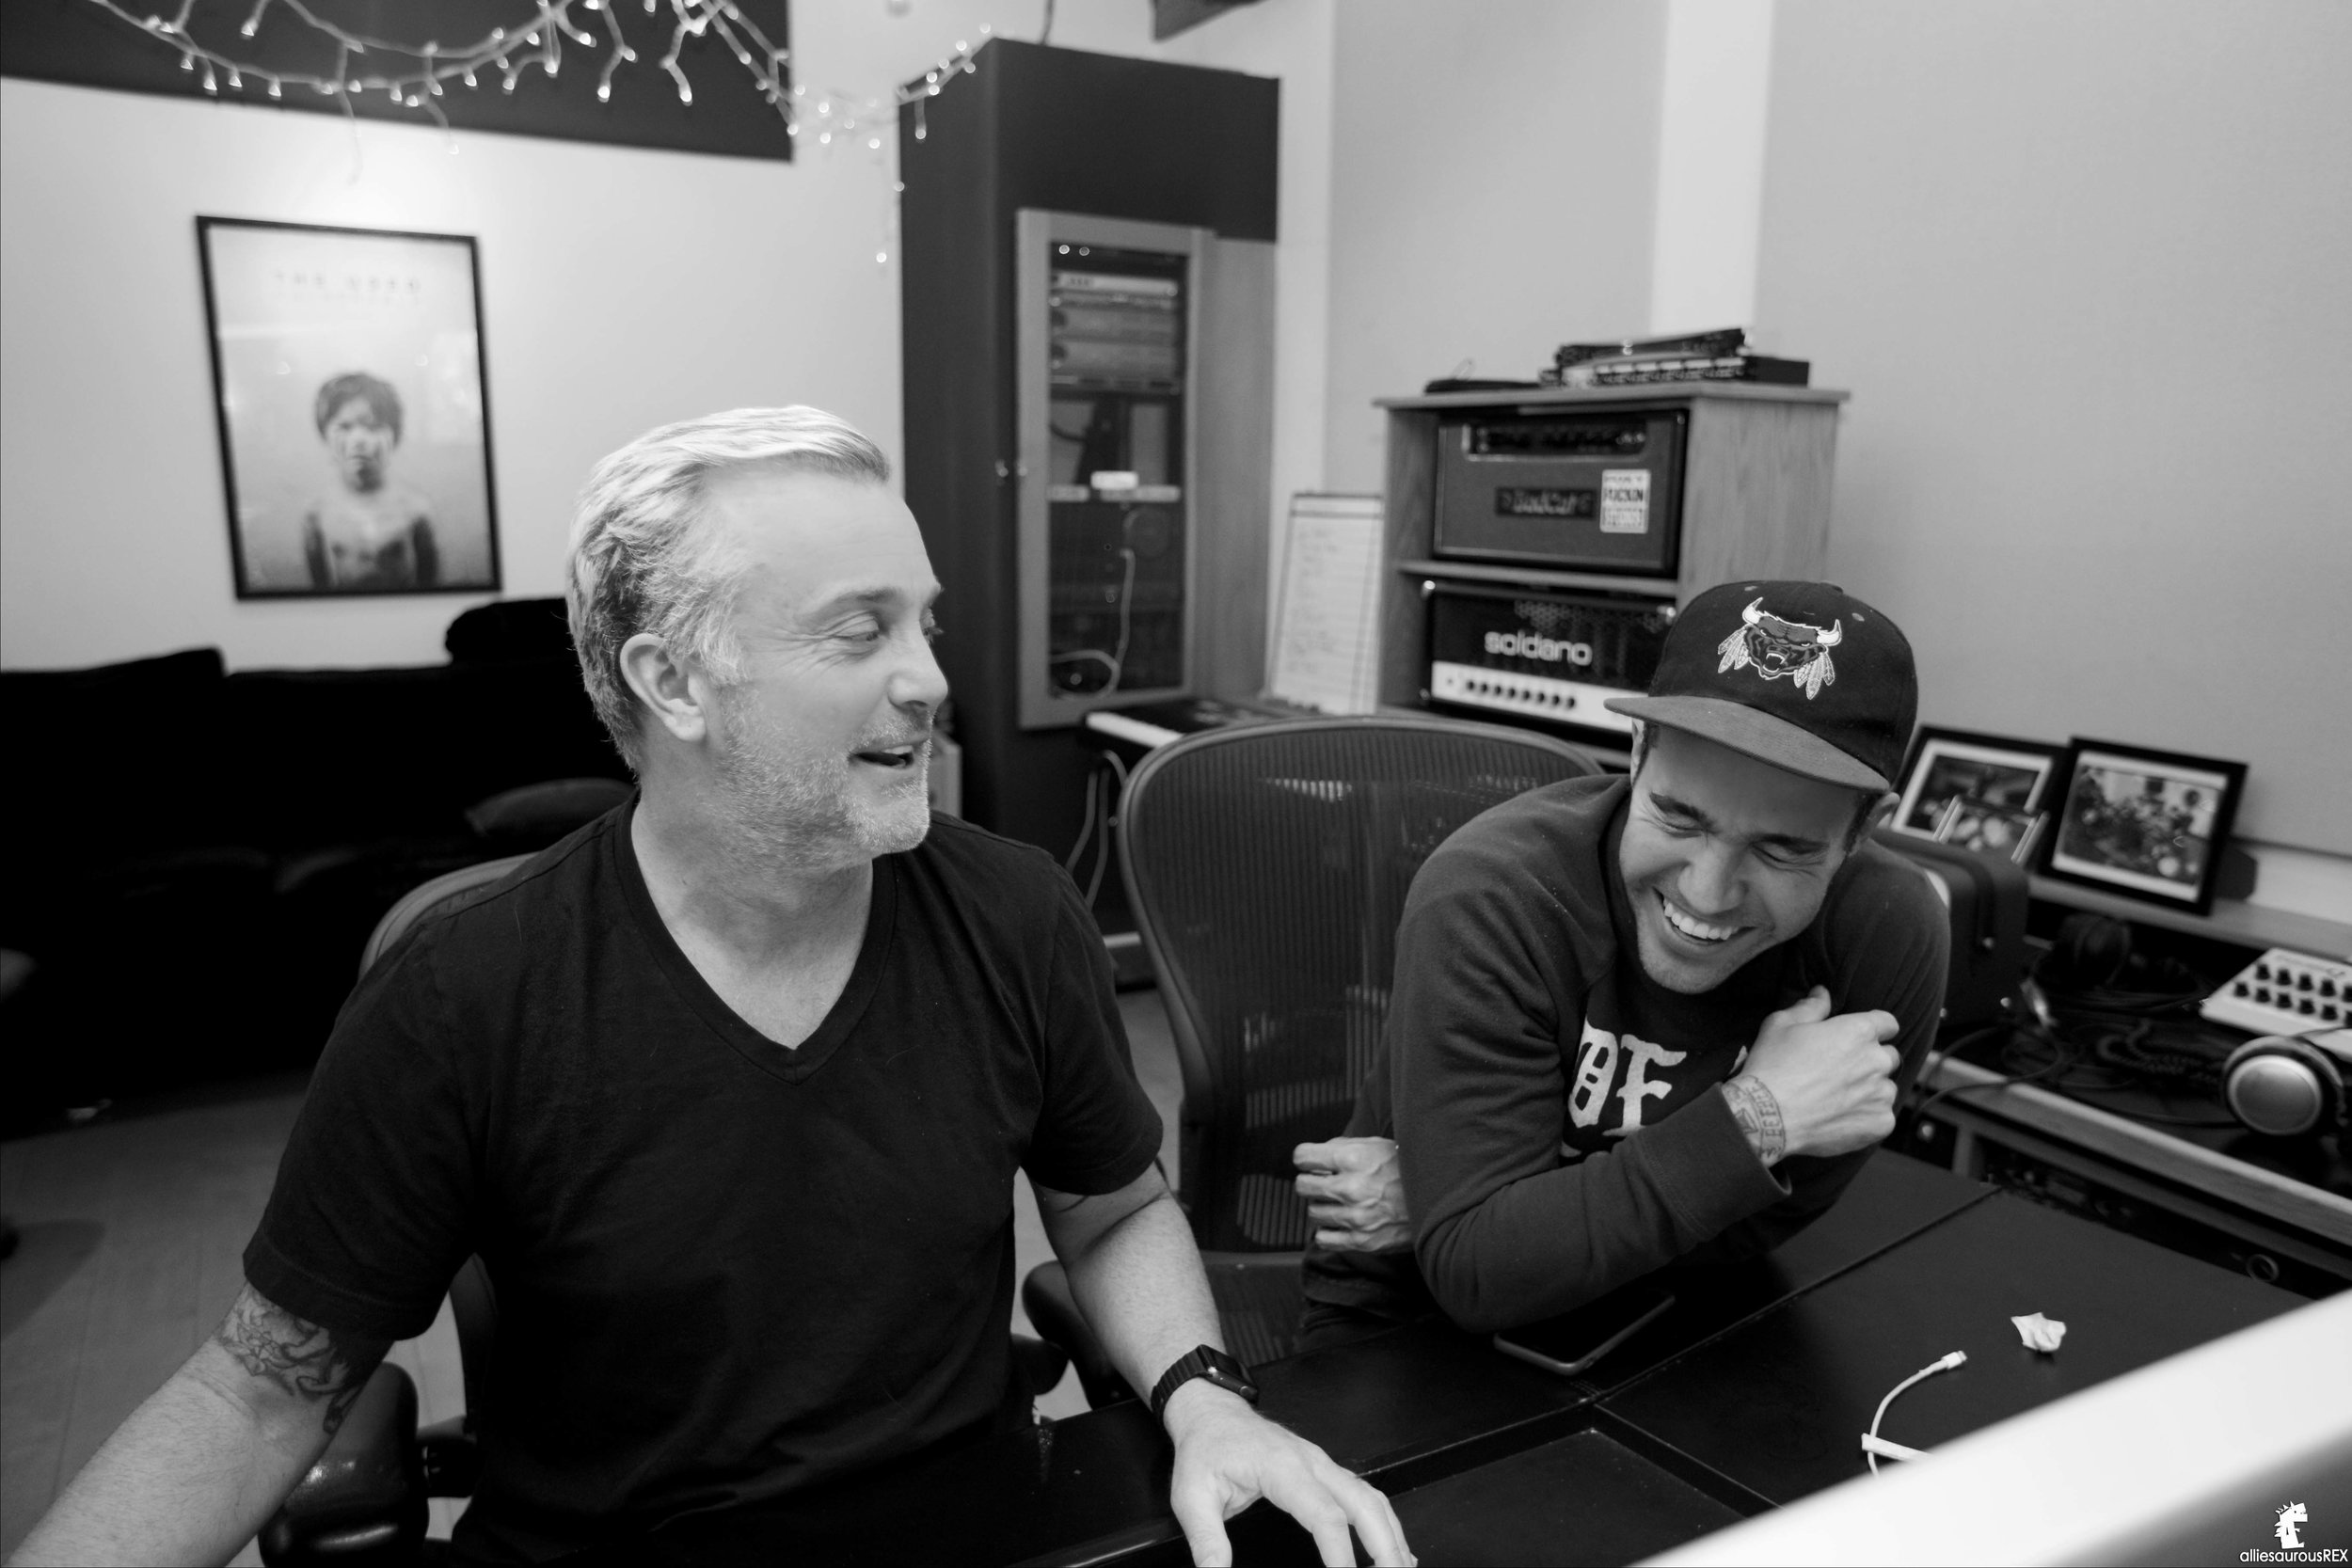  Pete Wentz and John Feldmann at Foxy Studios working on a secret project 